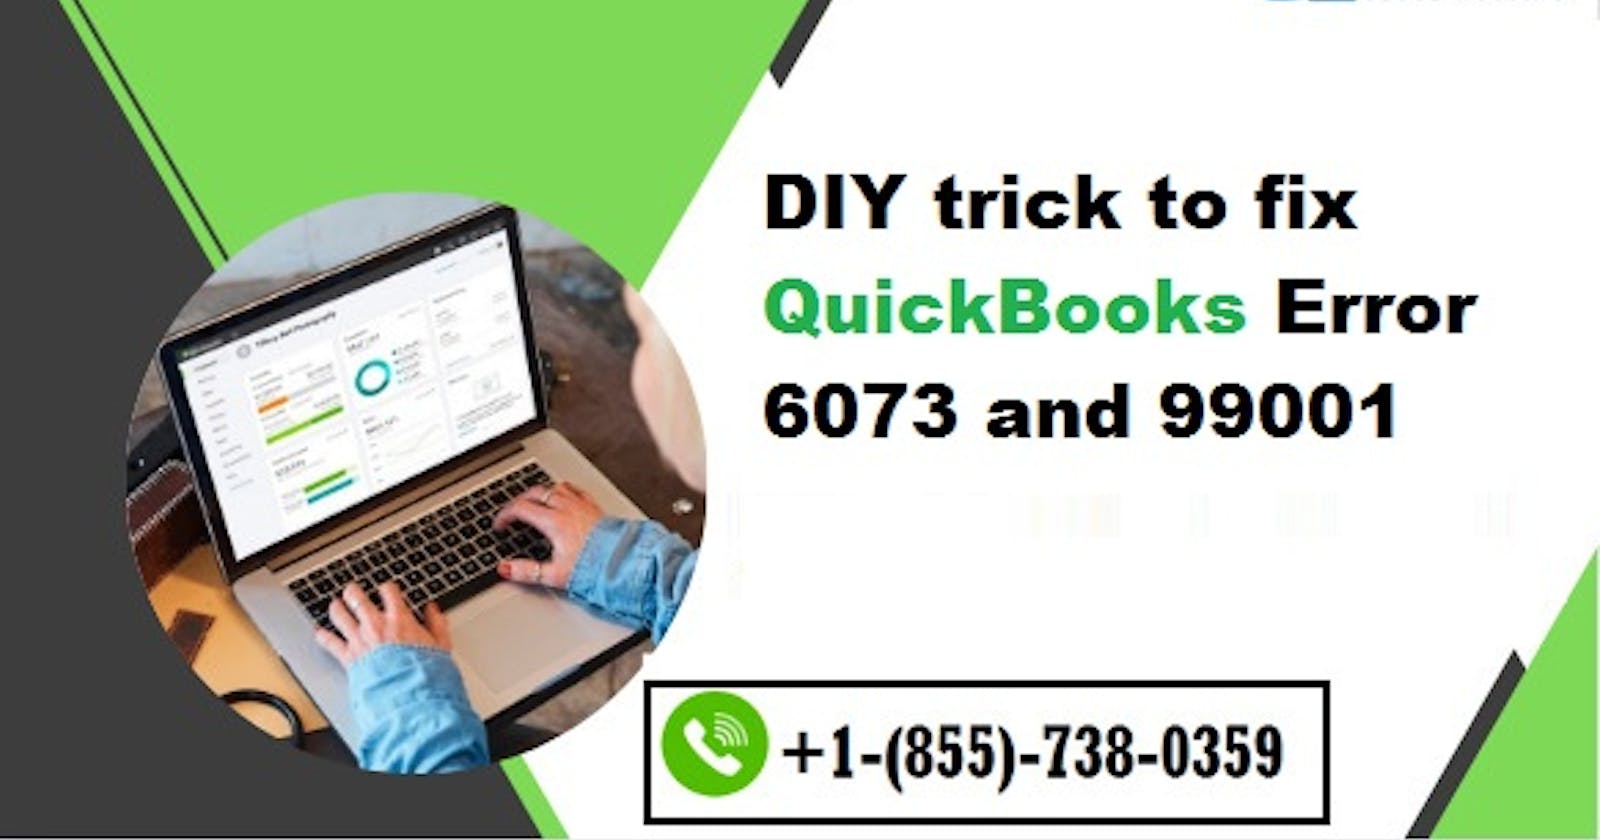 DIY trick to fix QuickBooks Error 6073 and 99001